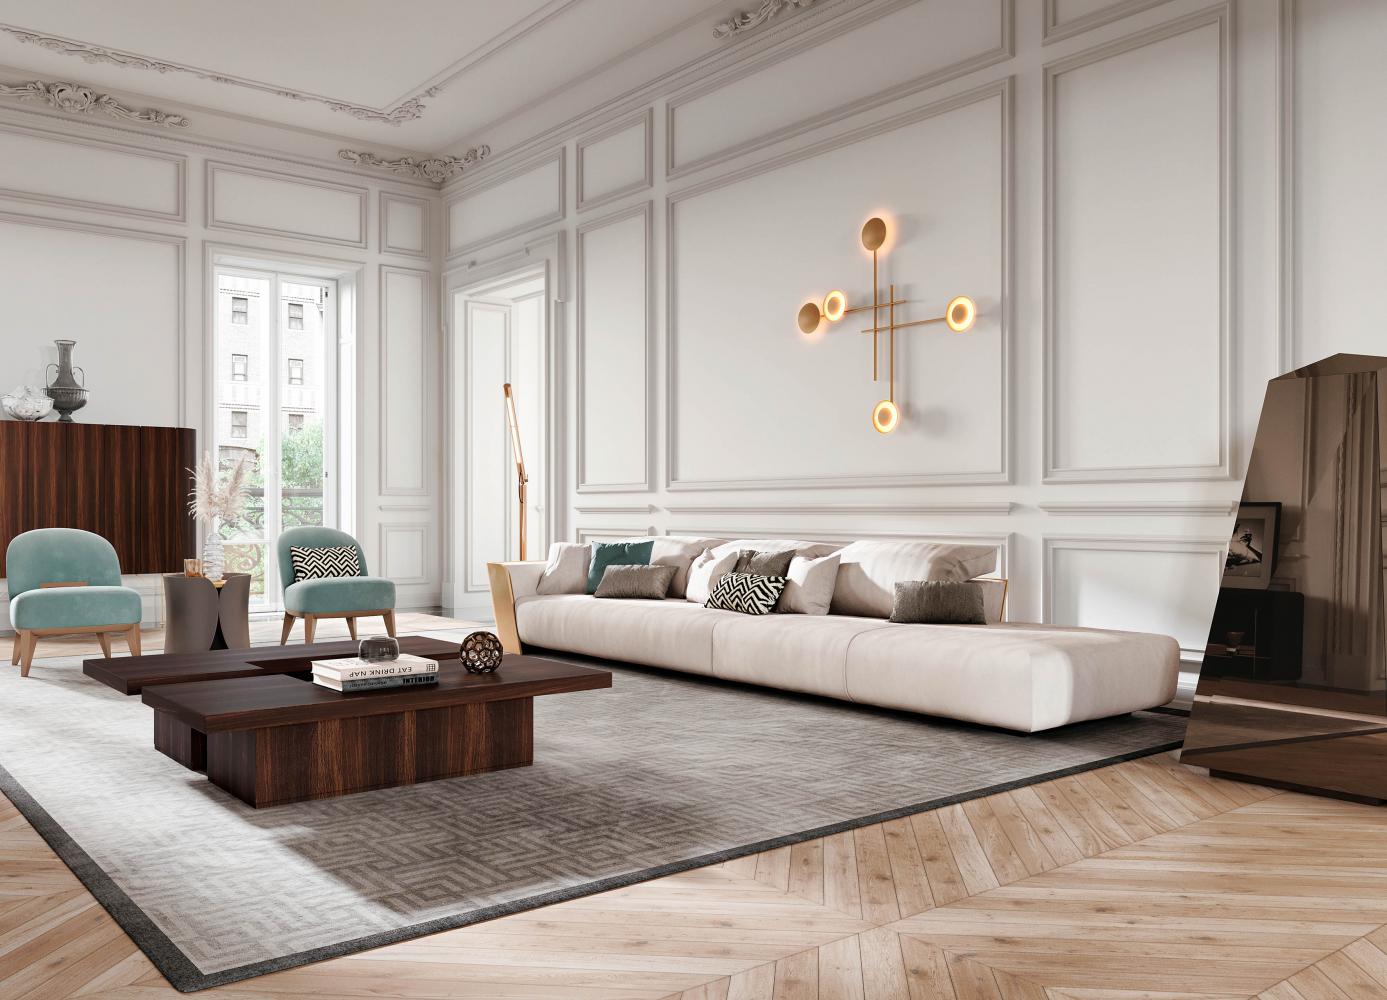 laurameroni modern living room and luxury white sofa inspiration